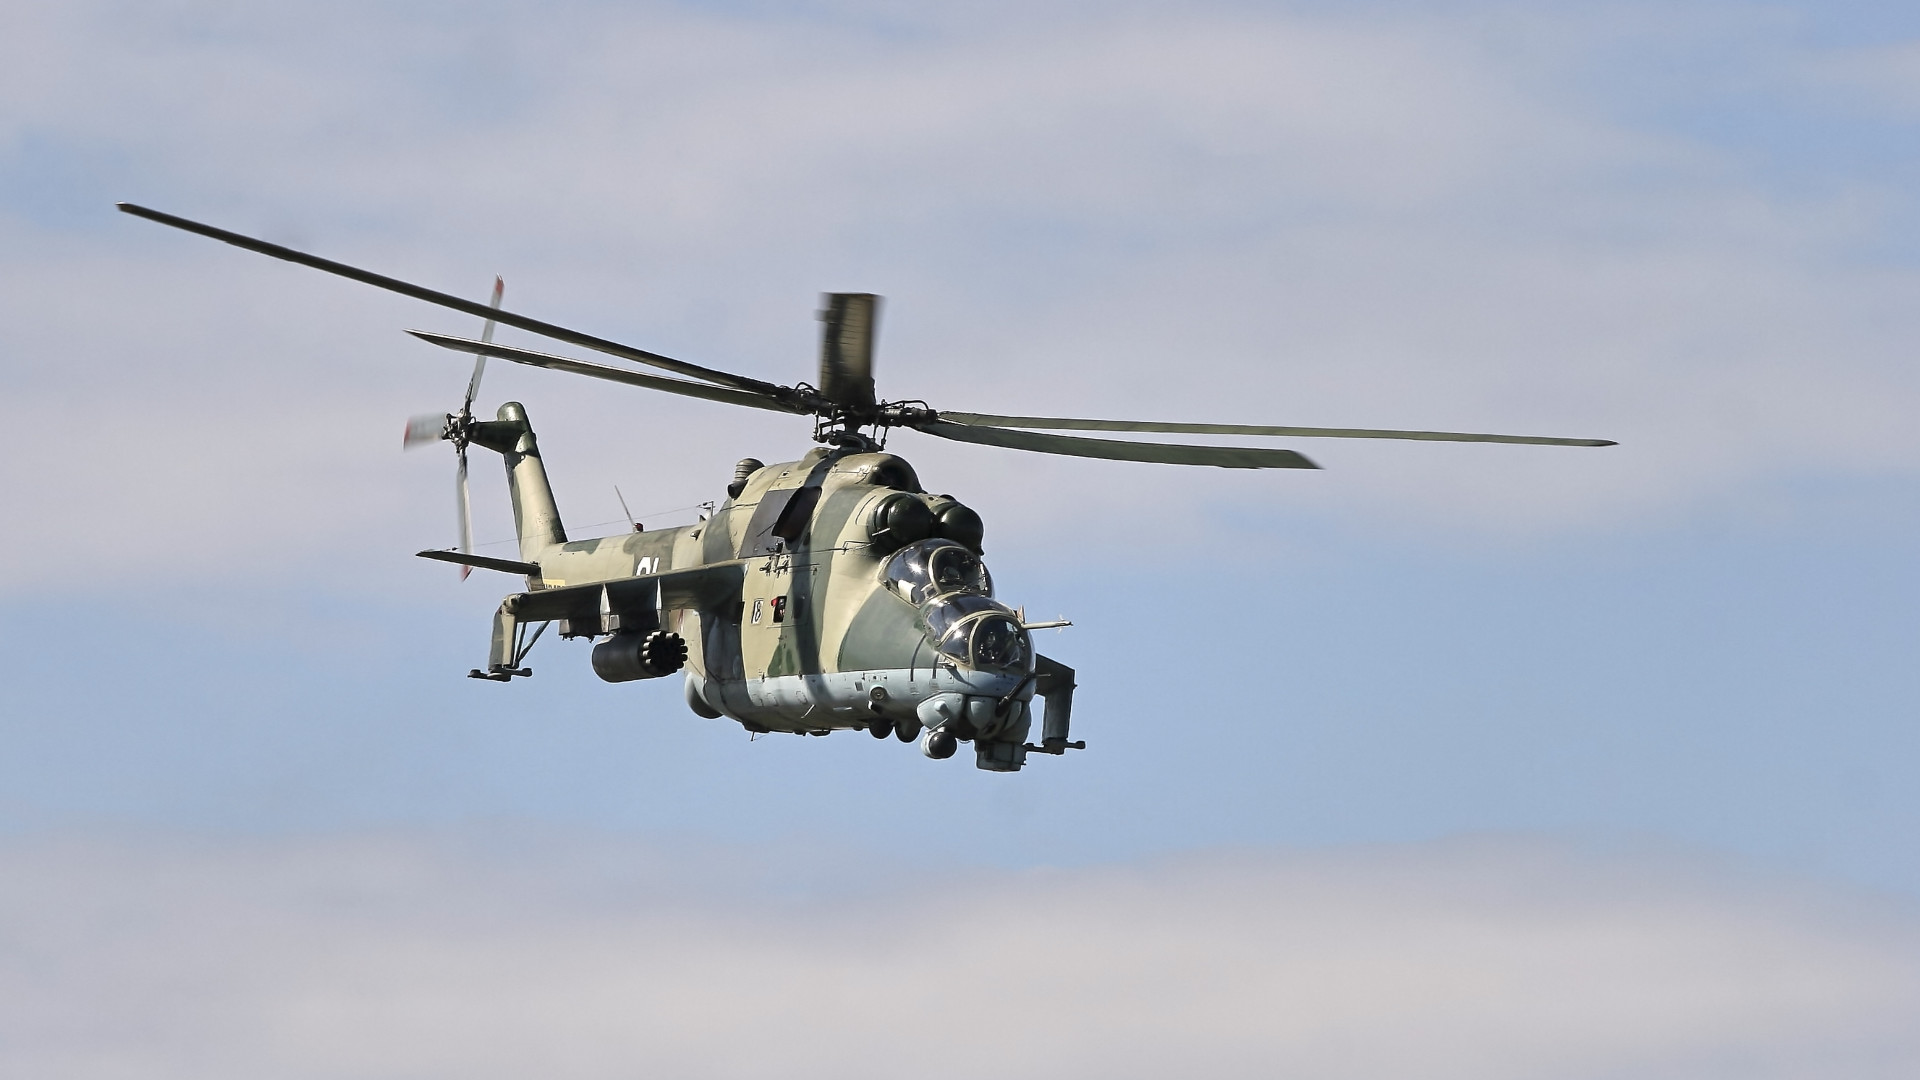 orosz ukran haboru konfliktus katona fegyver helikopter repulo legiero stock 523003